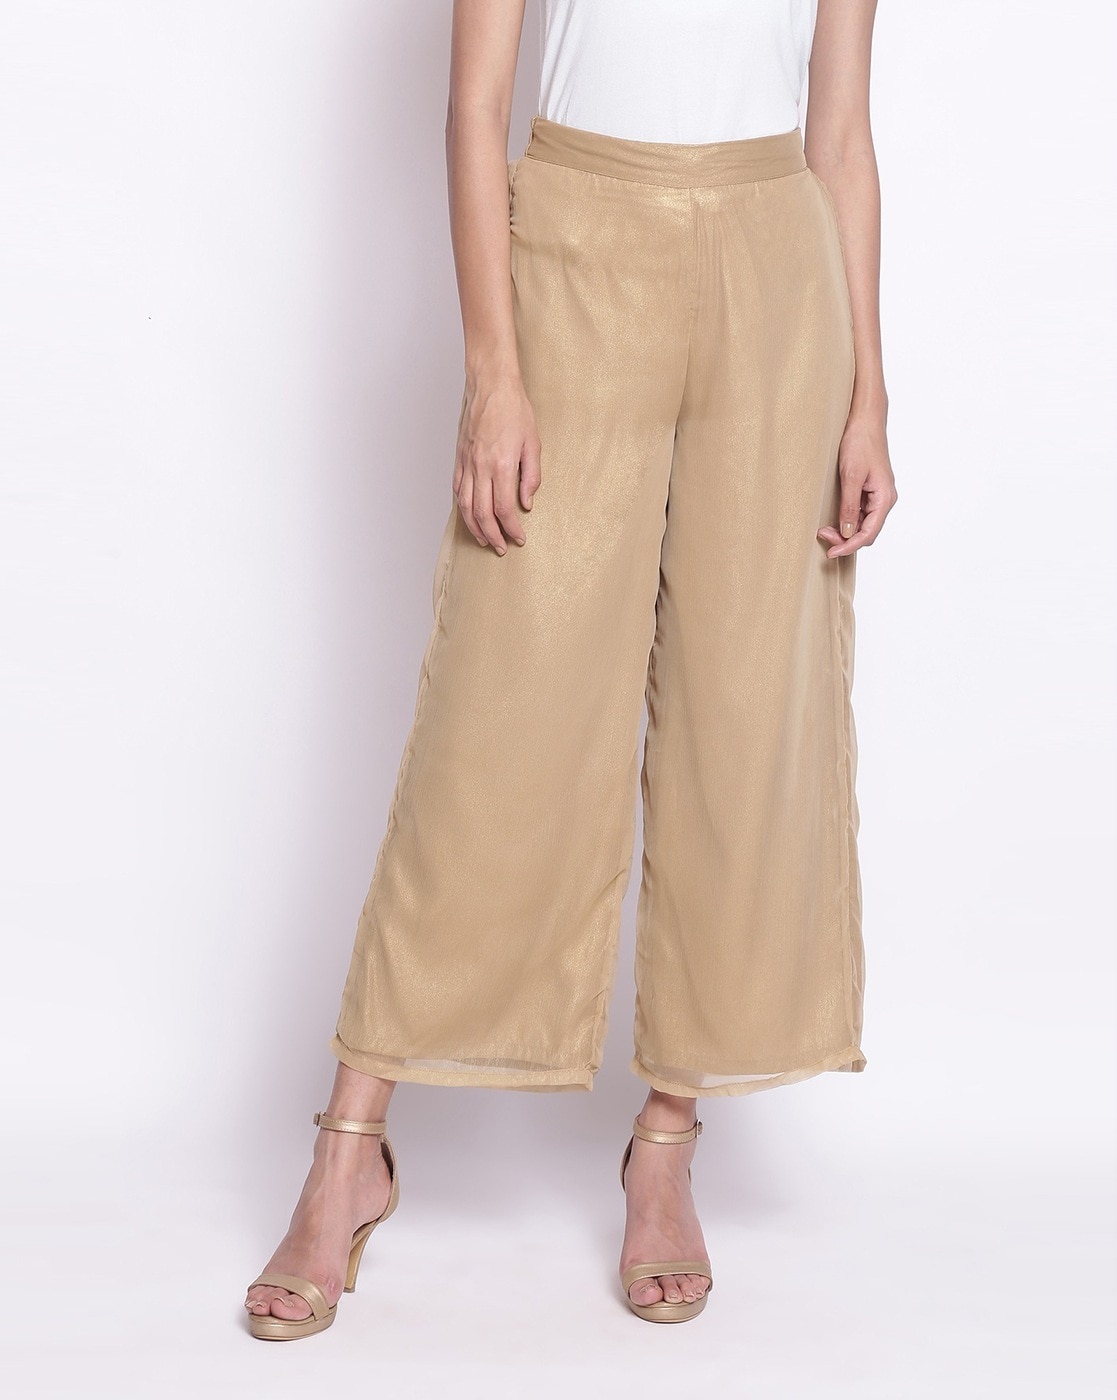 Blue Gold Palazzo Wrap Pants, Bali Batik Wrap Pants, Handmade Batik Trousers,  Festival Pants, Summer Pants for Women - Etsy